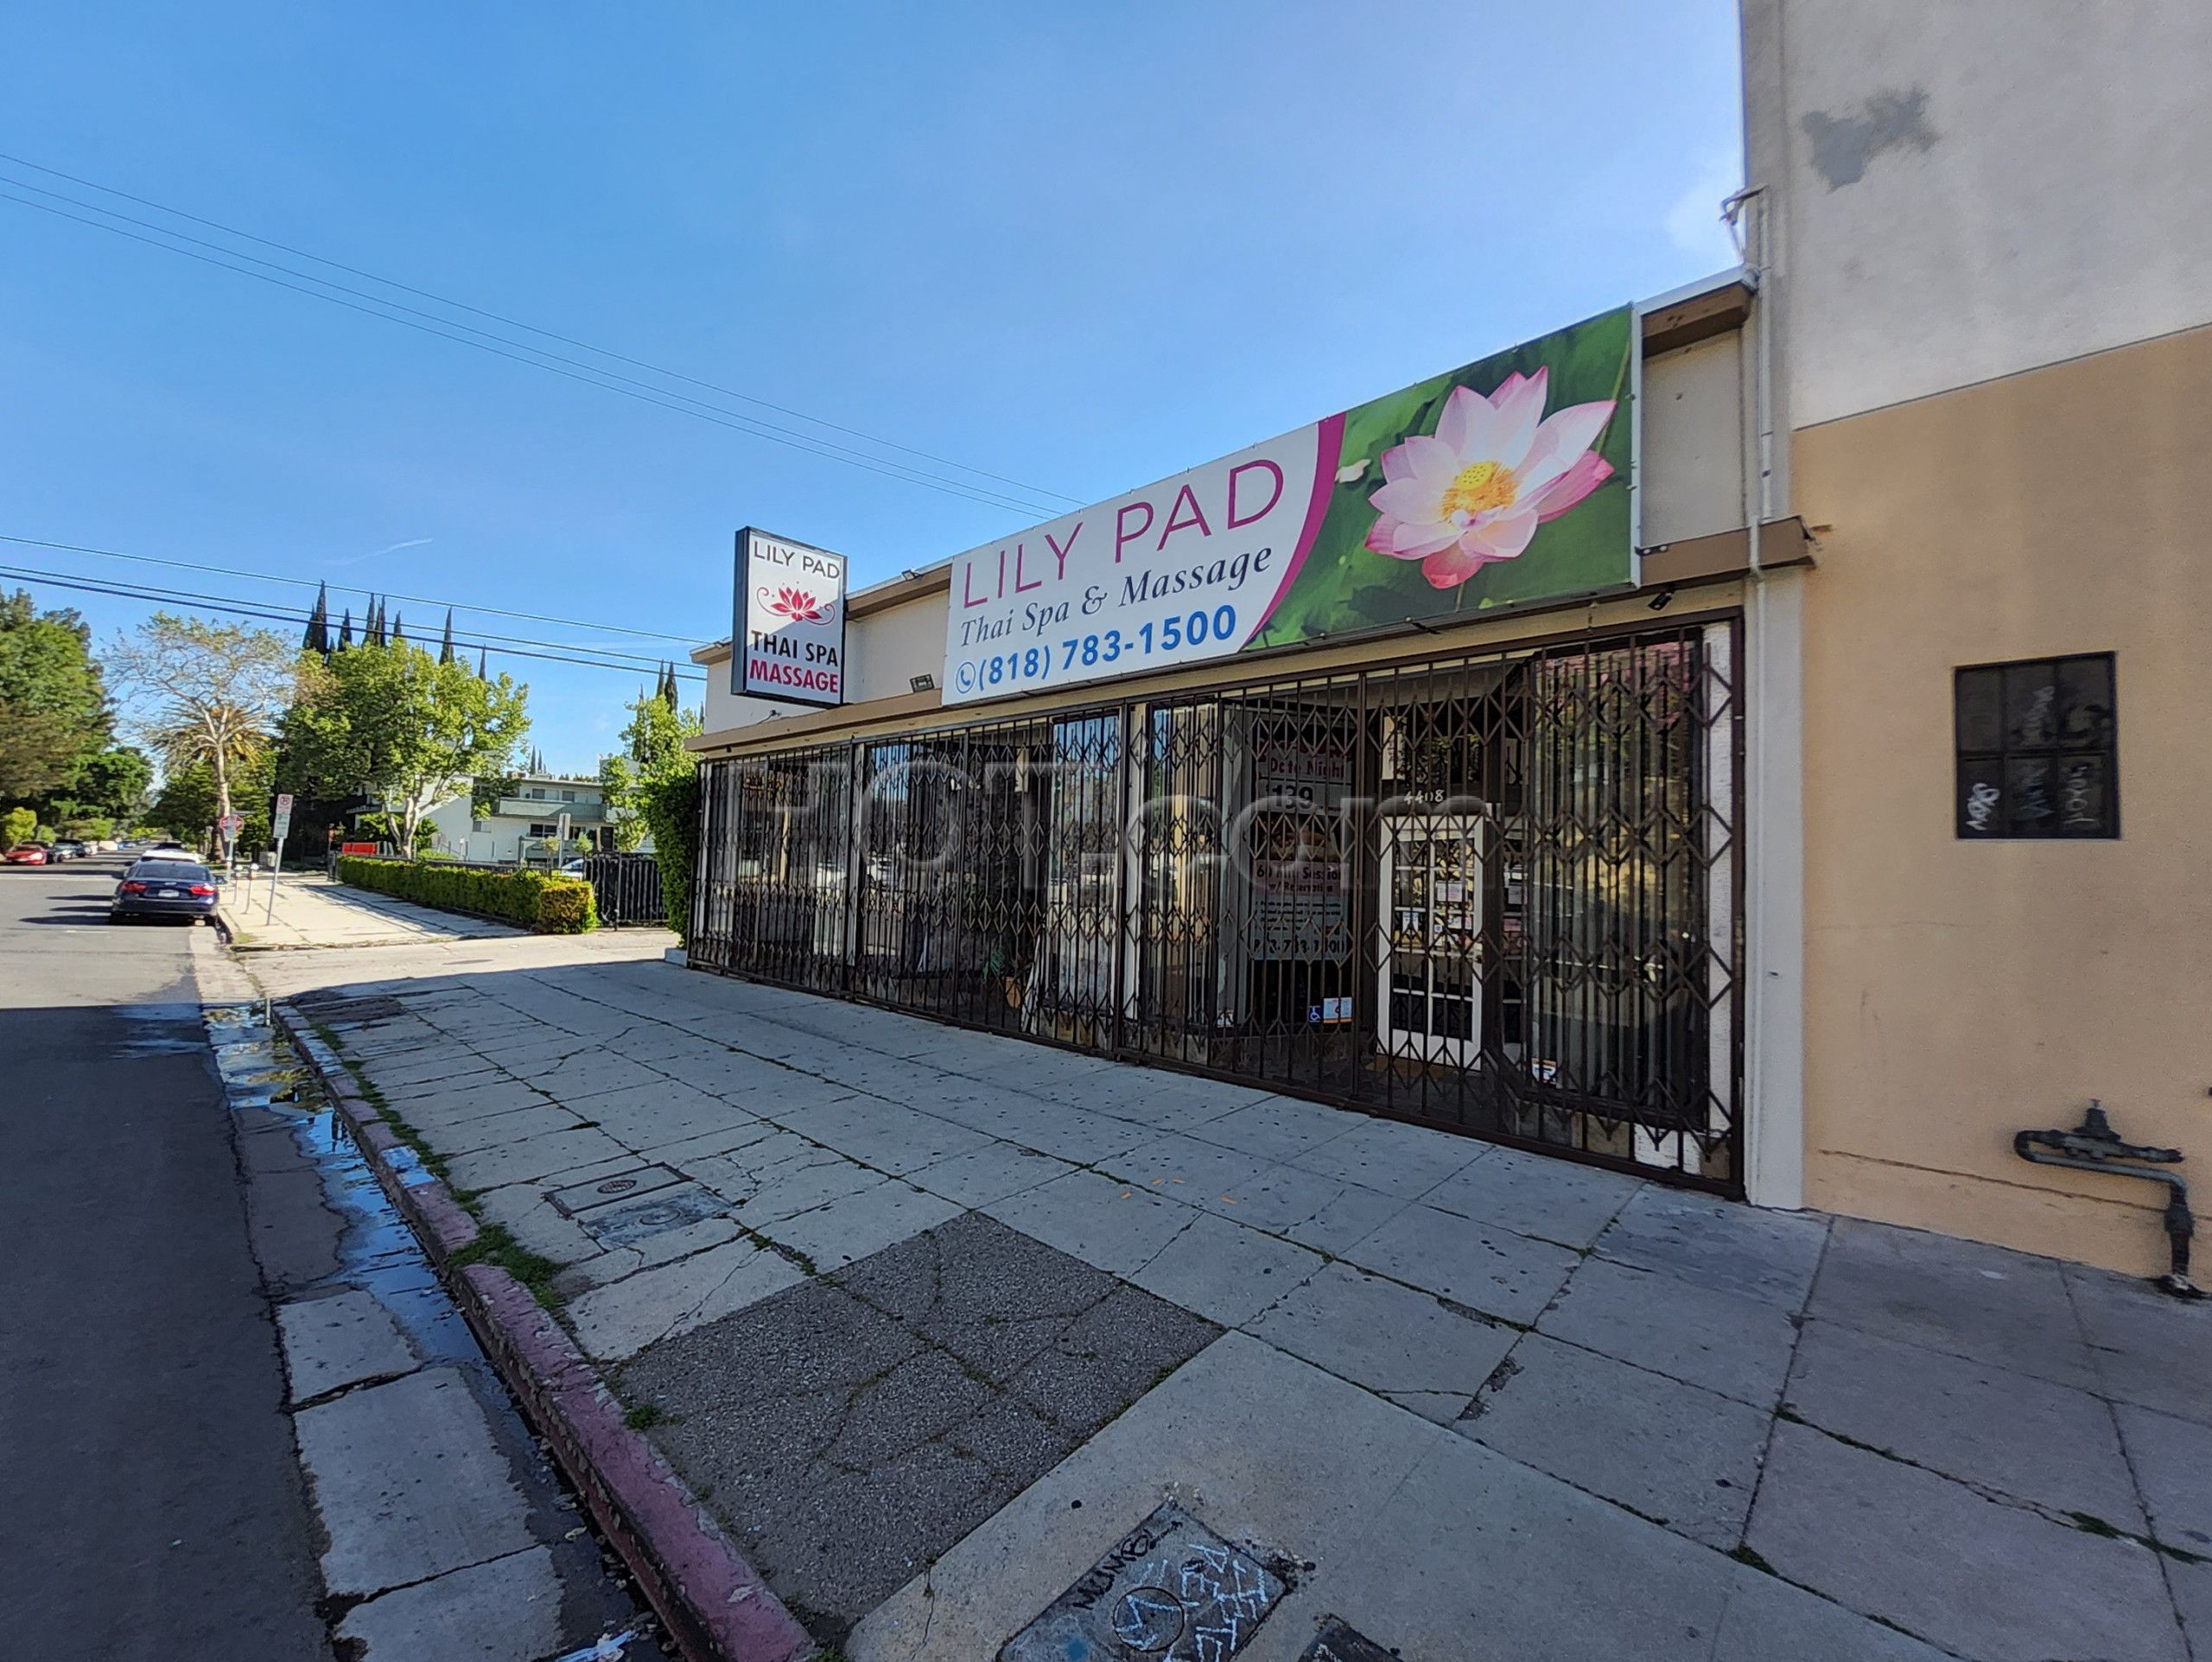 Sherman Oaks, California Lily Pad Thai Spa & Massage